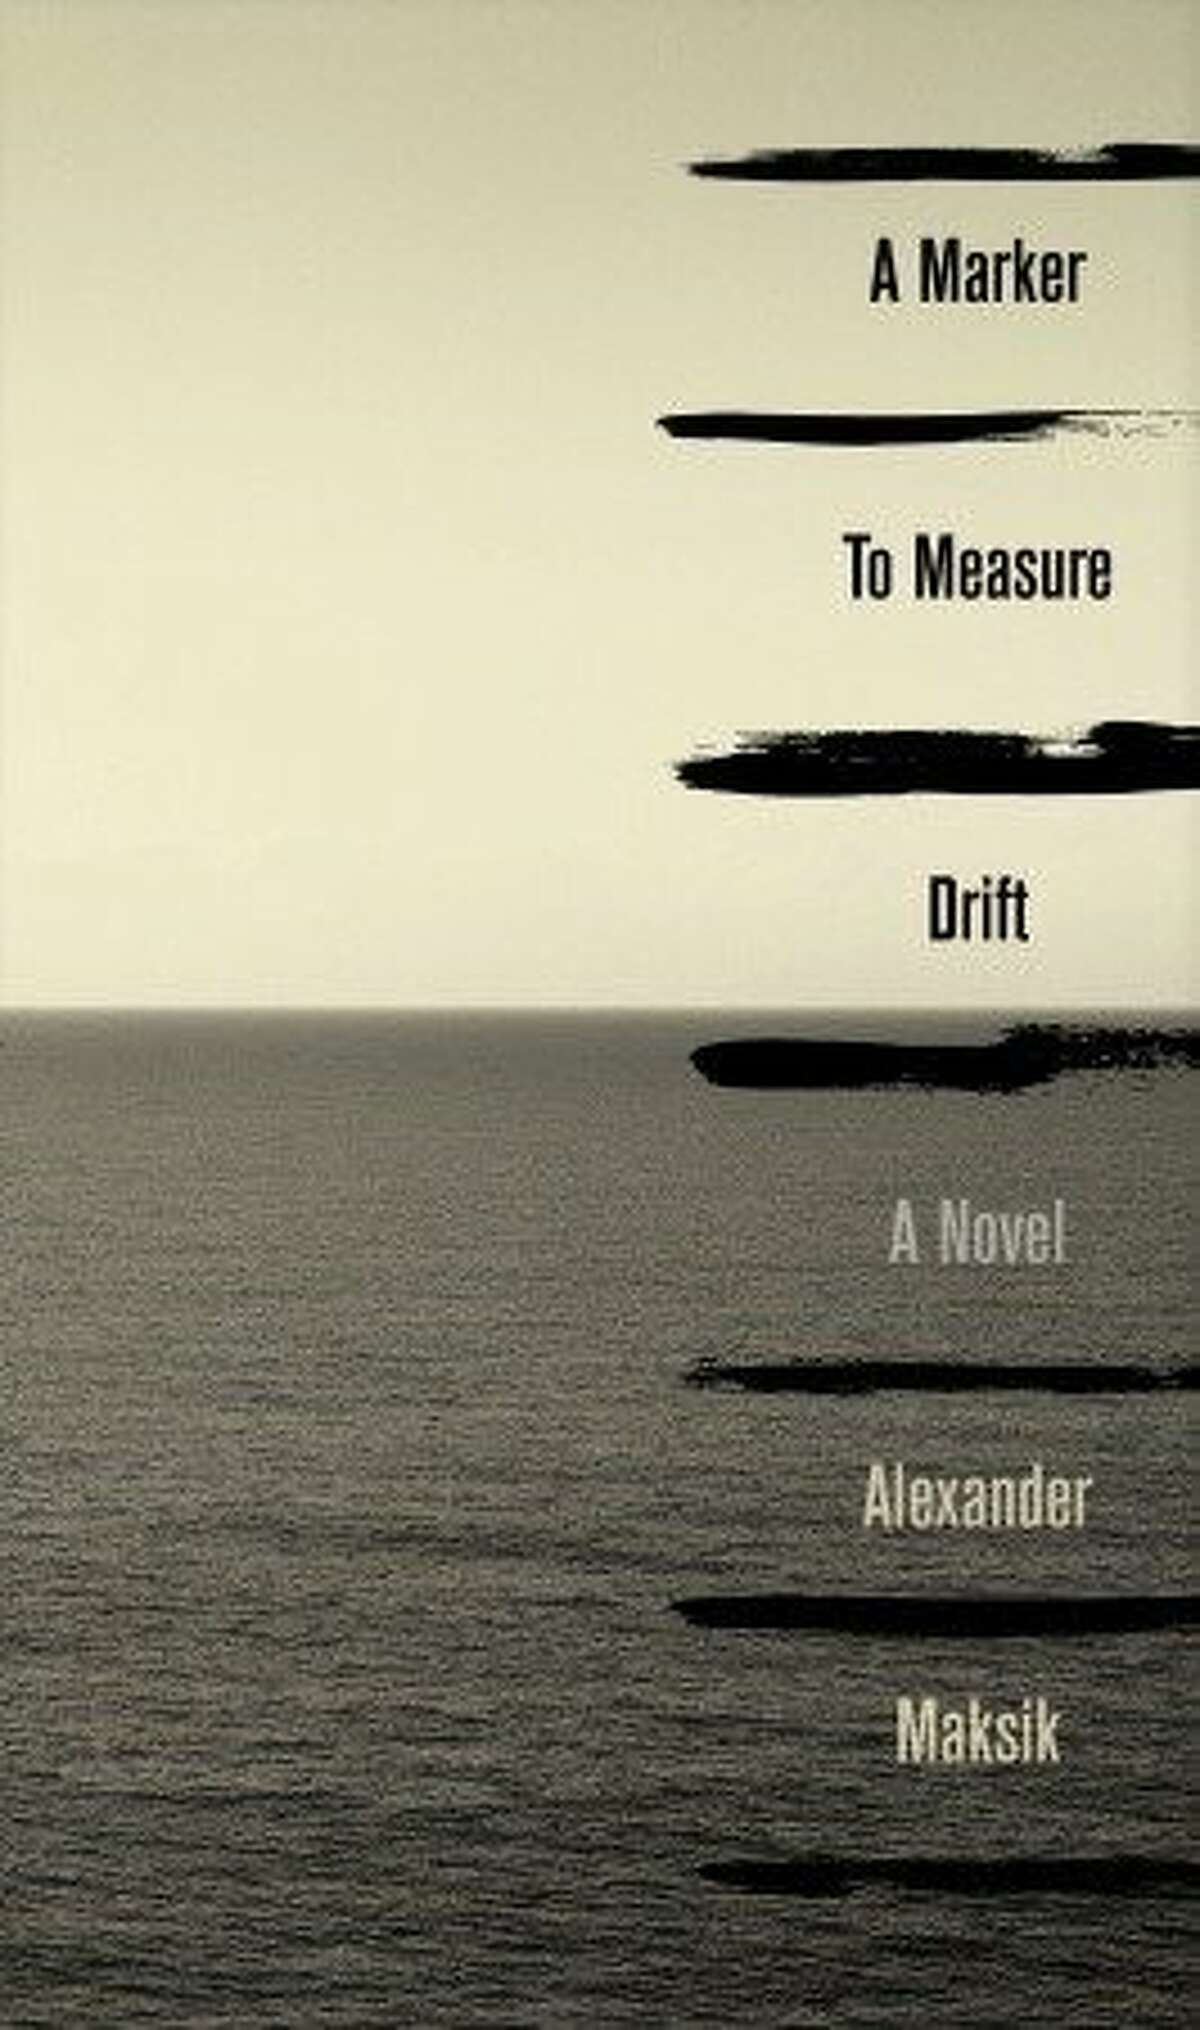 A Marker to Measure Drift, by Alexander Maksik